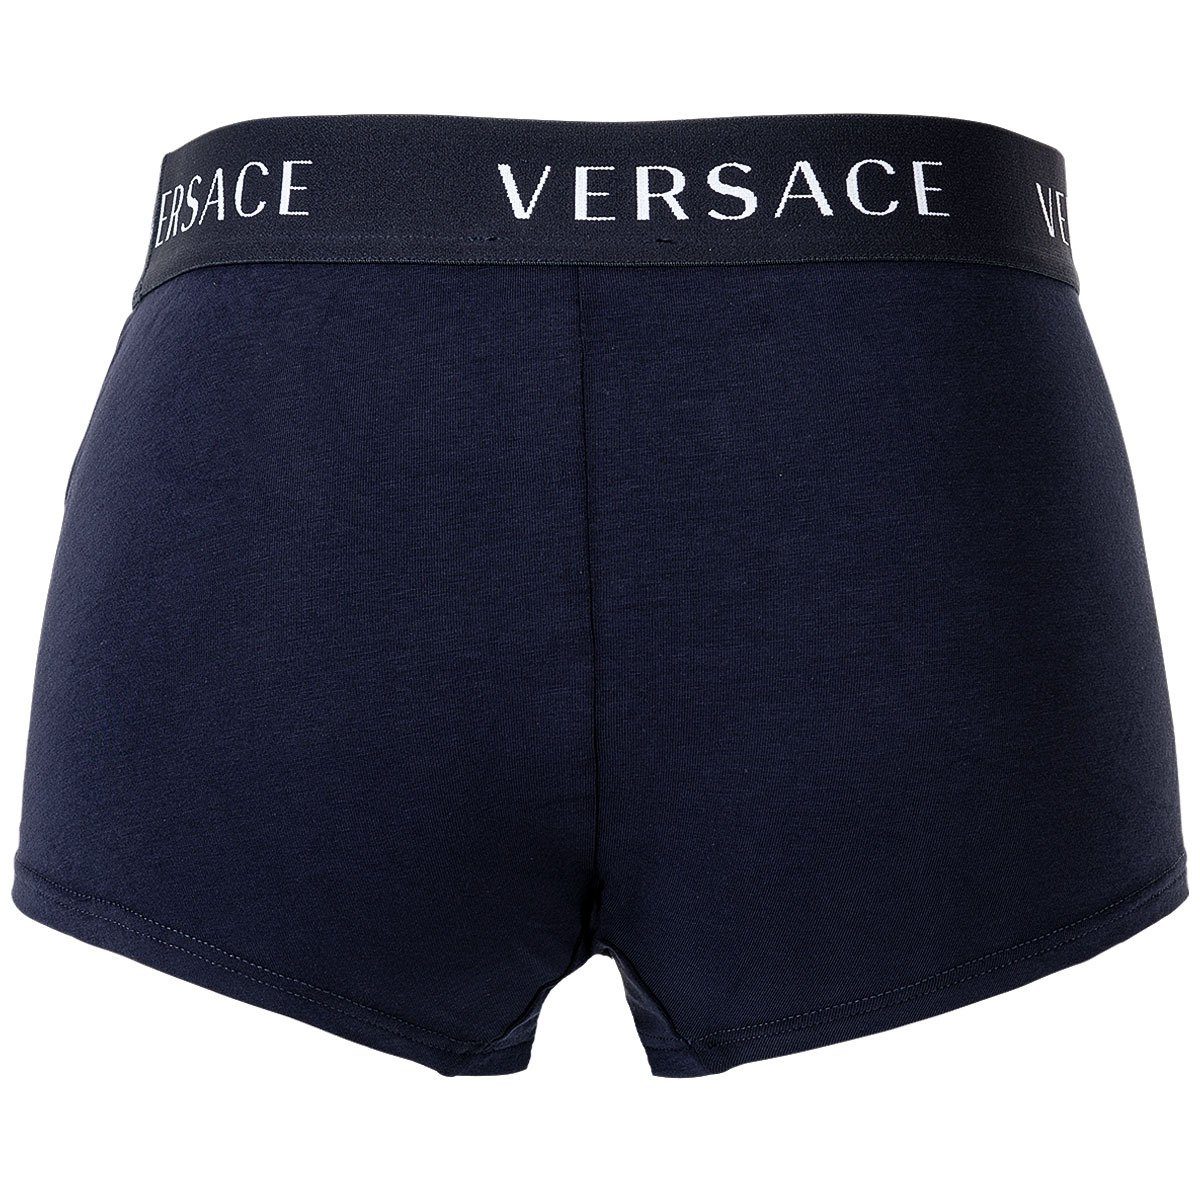 Versace Boxer Weiß/Blau - Herren Boxer Trunk Shorts, 2er Pack